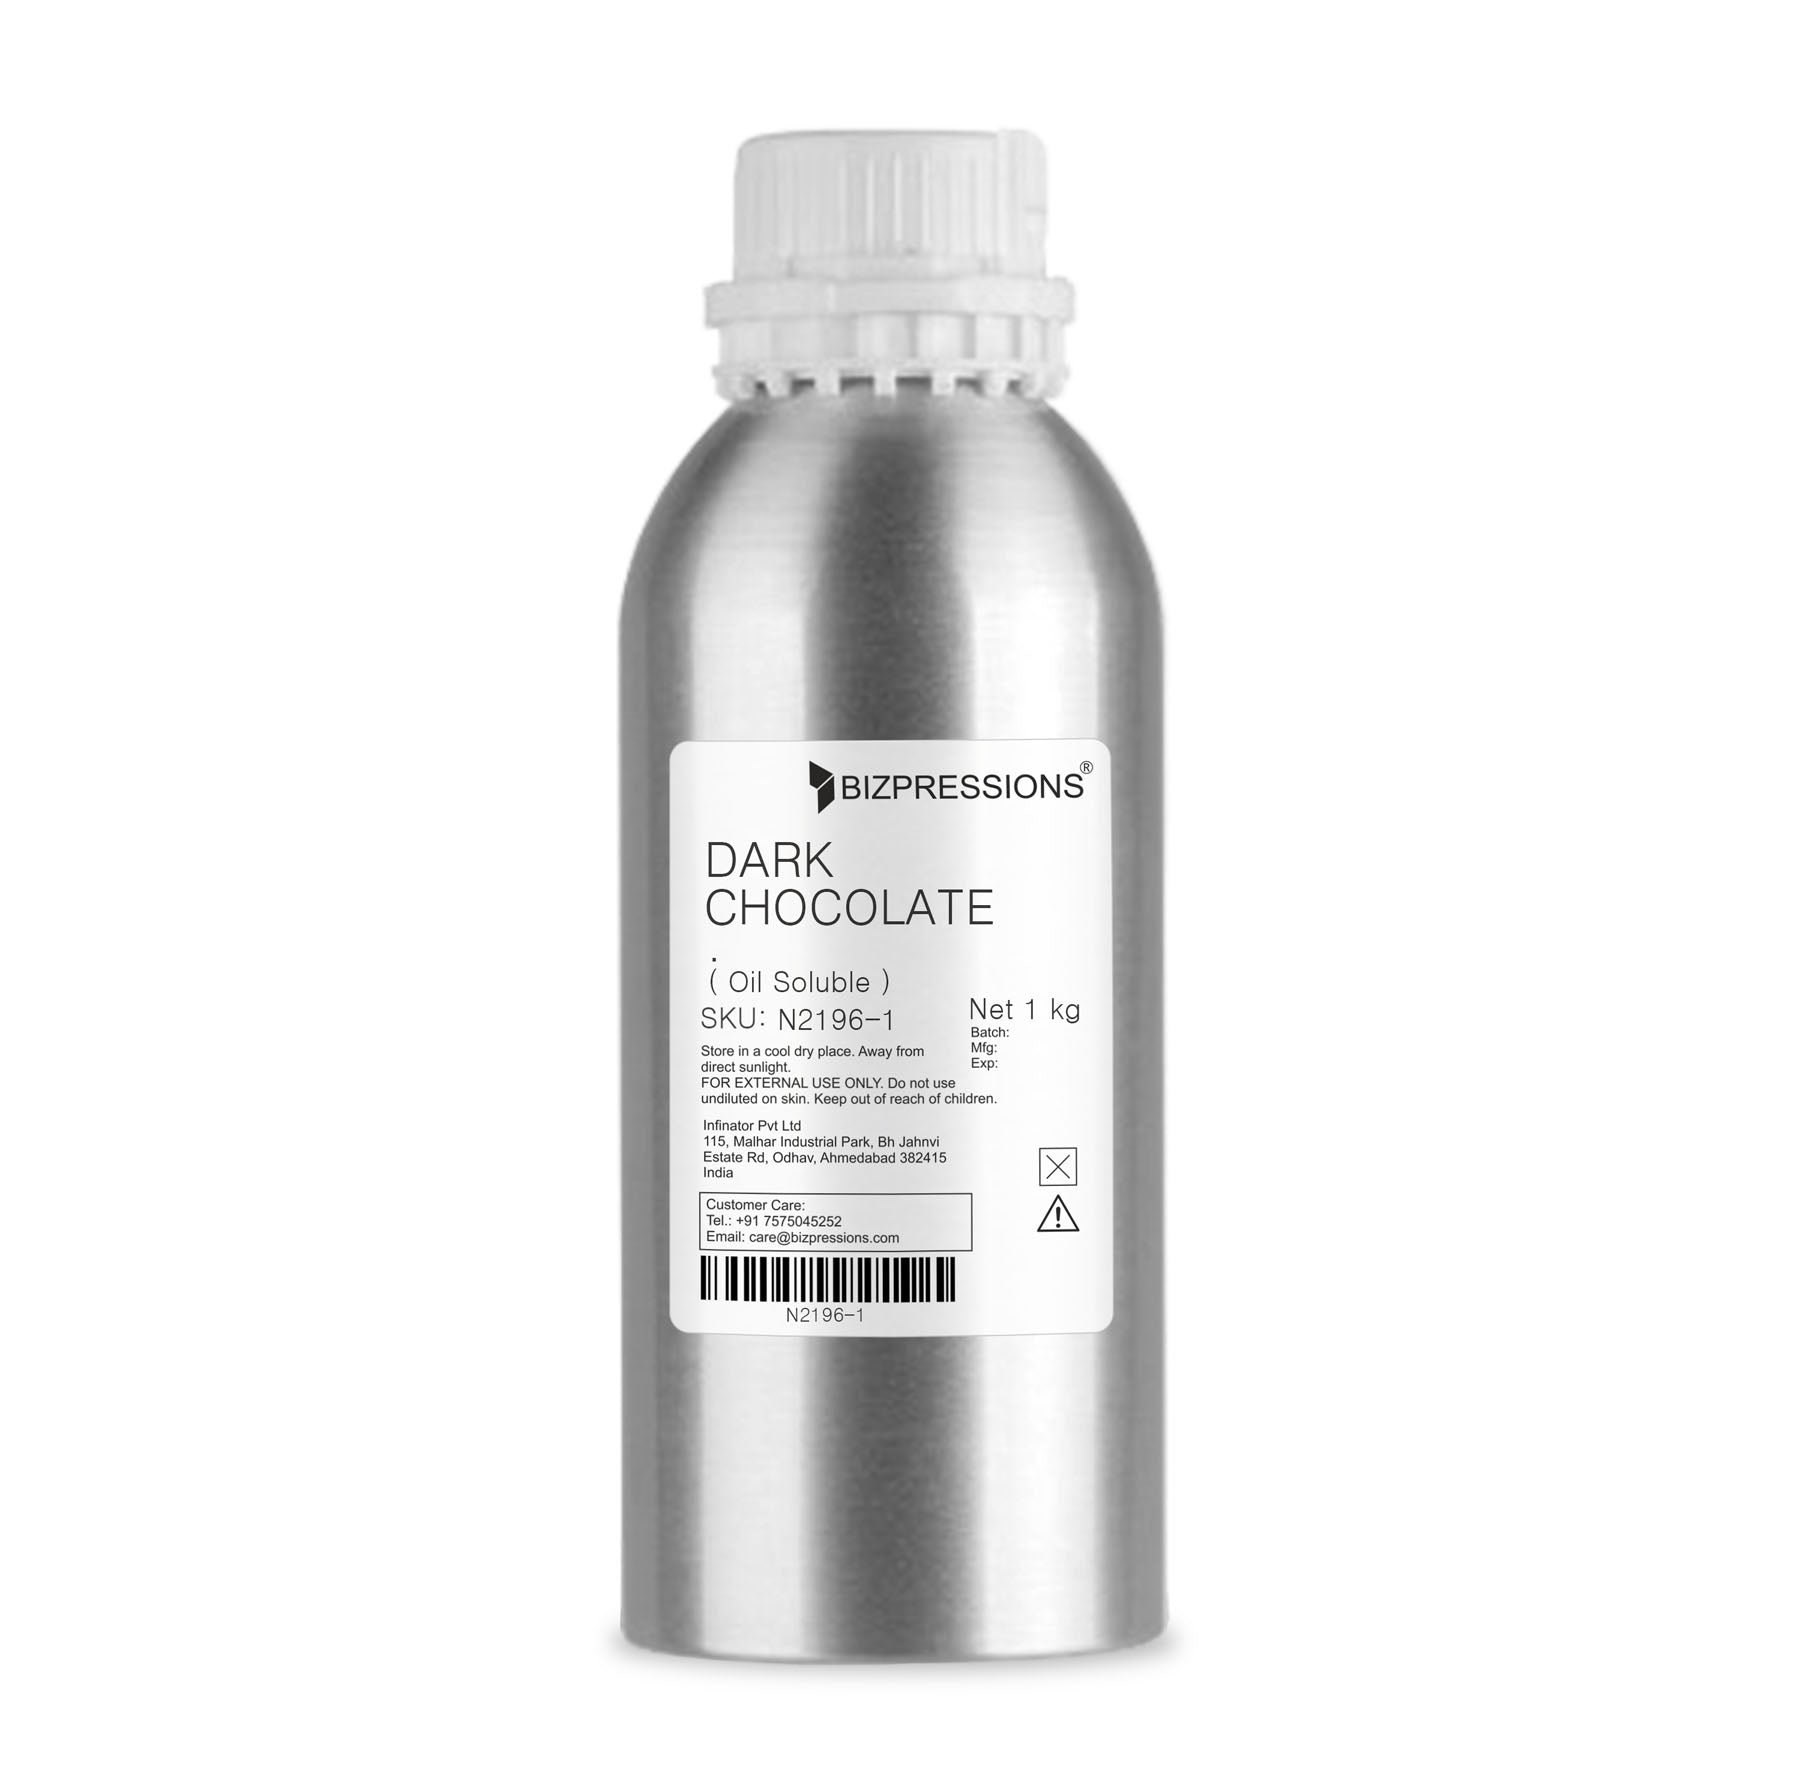 DARK CHOCOLATE - Fragrance ( Oil Soluble ) - 1 kg